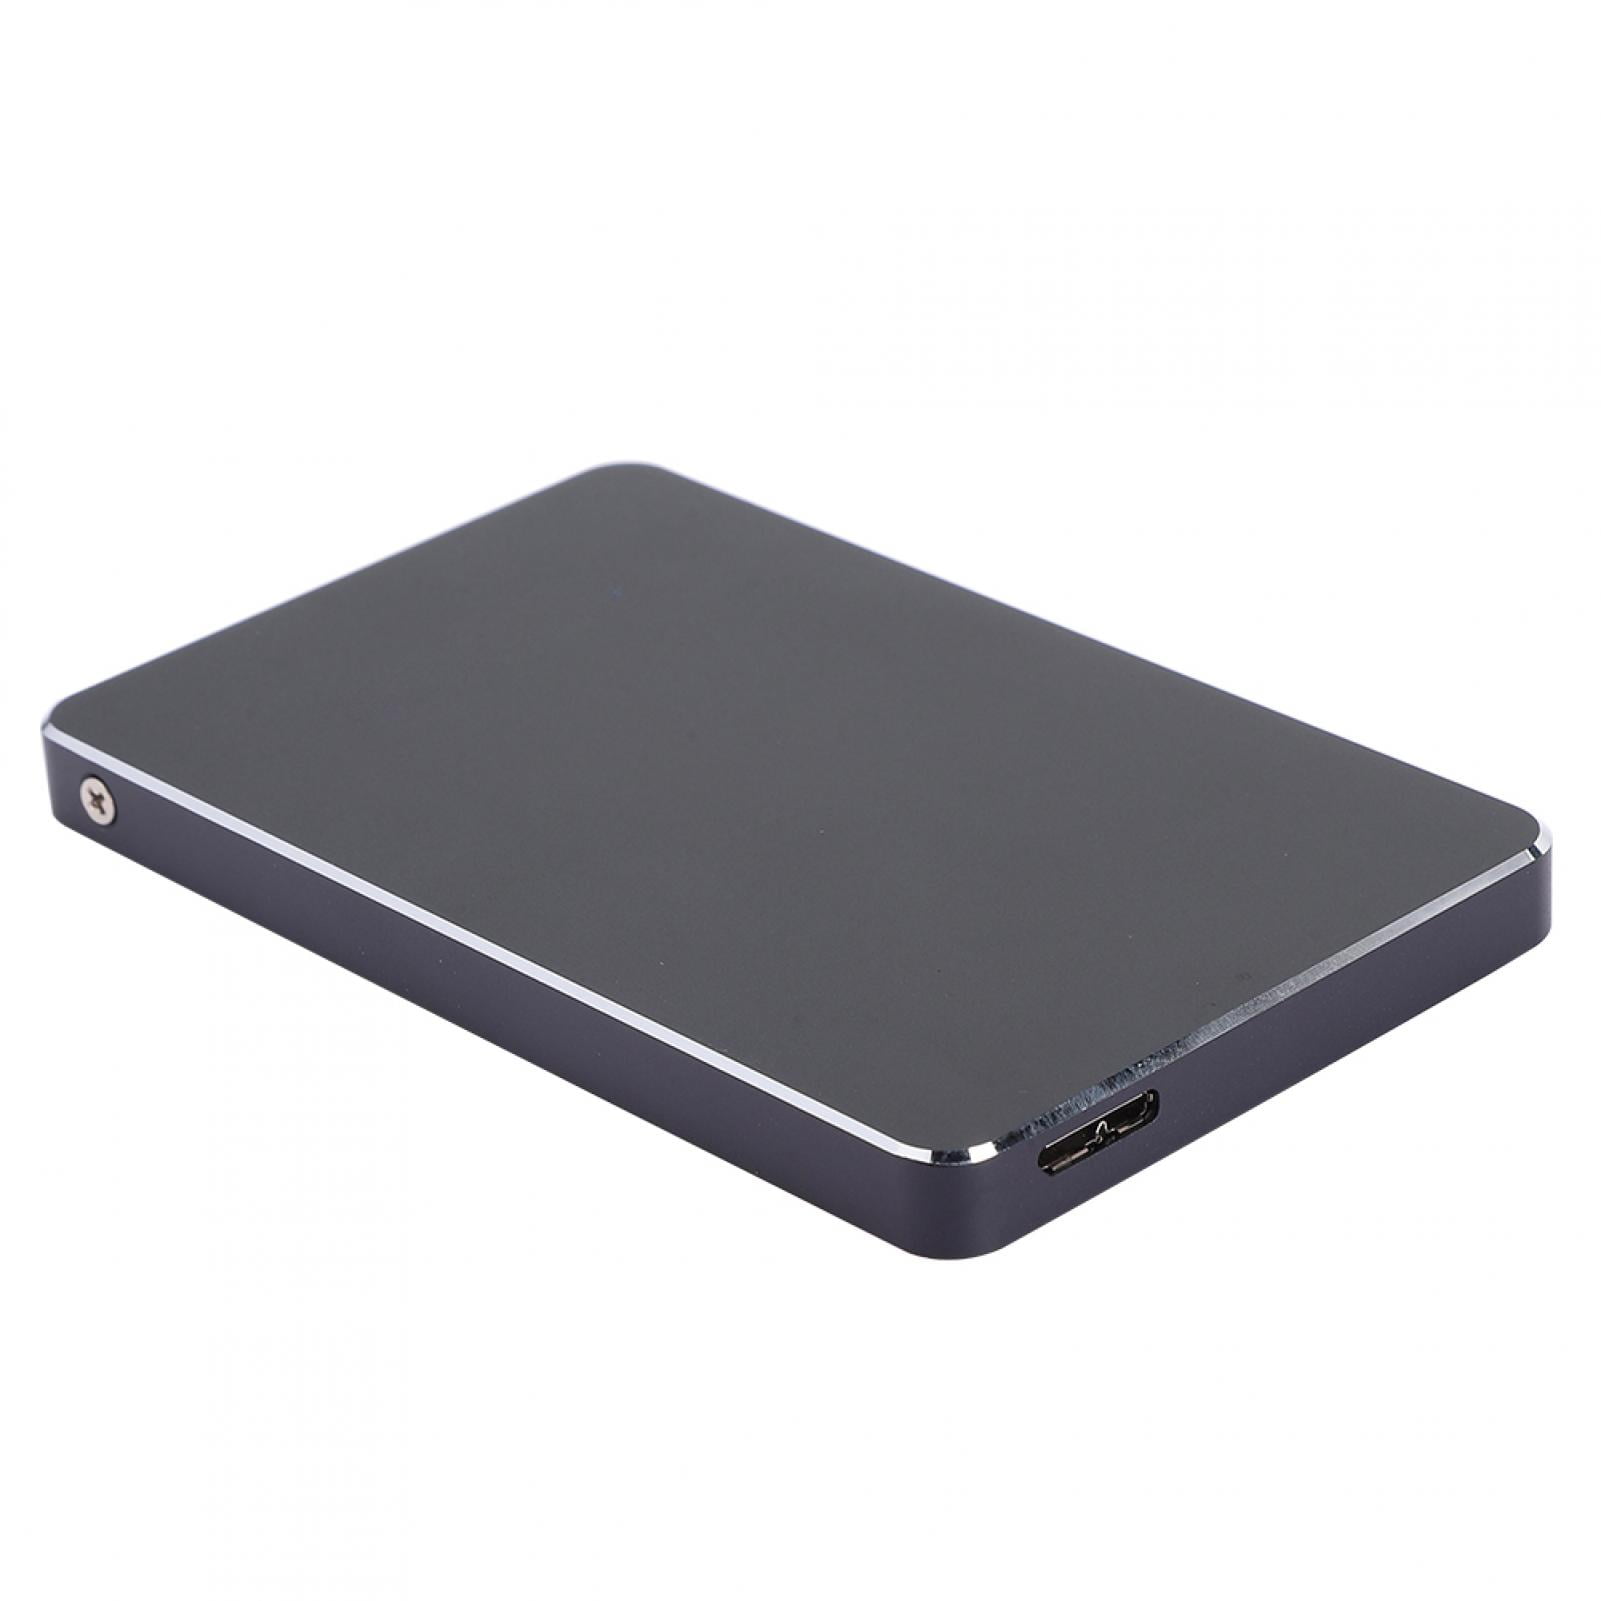 Tebru Solid State Hard Disk SSD Portable Black Anti‑Vibration 250GB for 98SE / ME,SSD,Hard Disk - Walmart.com